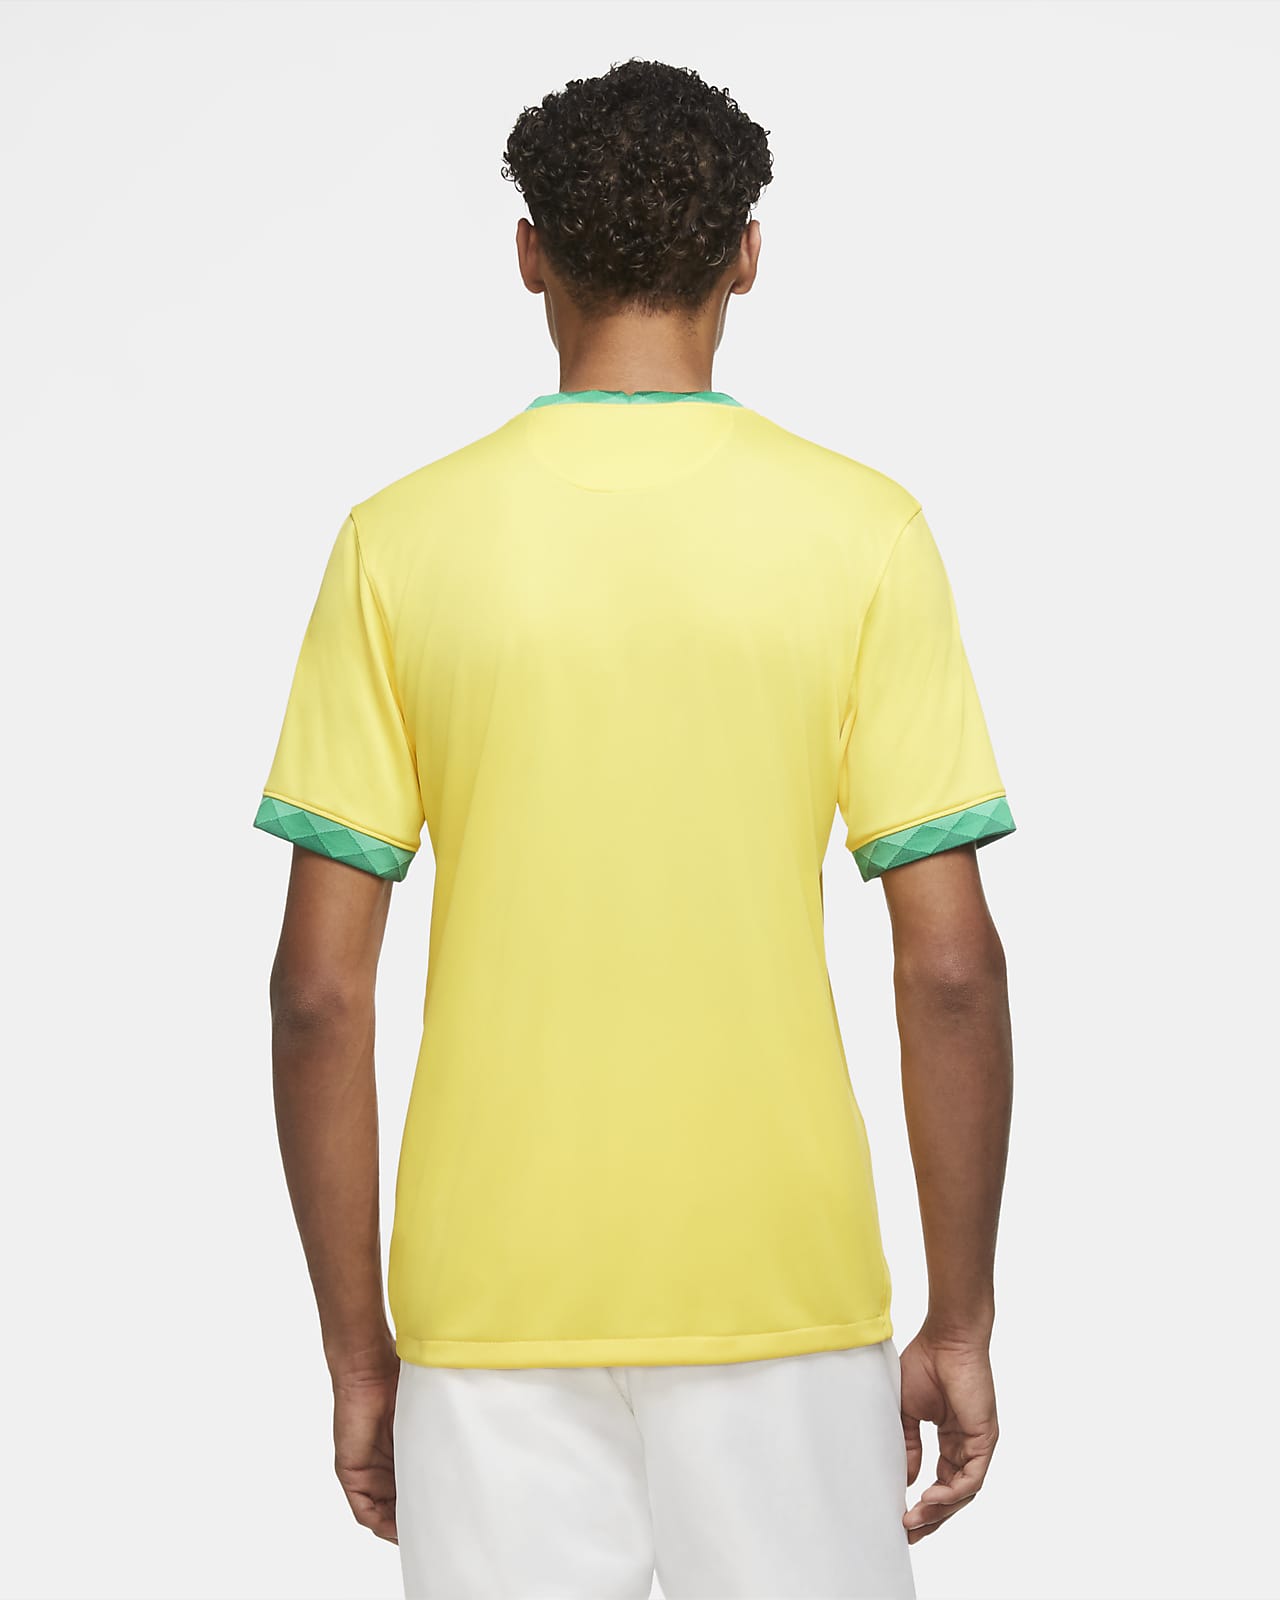 Camiseta do Brasil Original Copa 2014, Camiseta Masculina Nike Usado  39560916